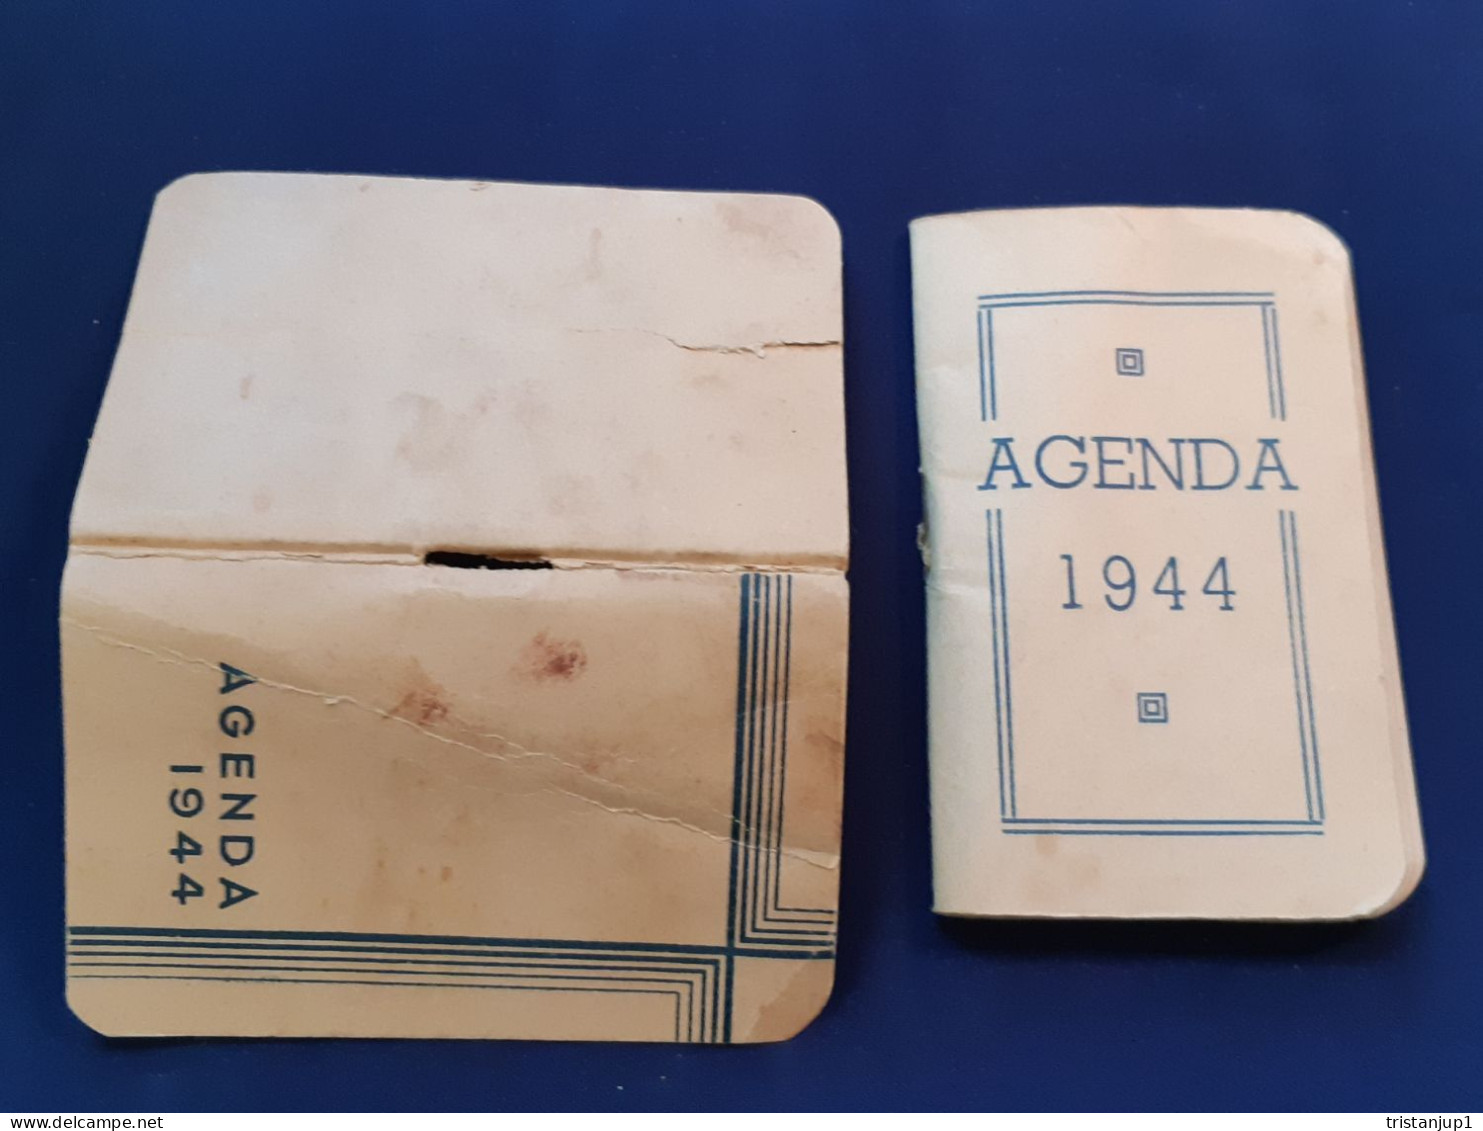 Mini agenda de 1944